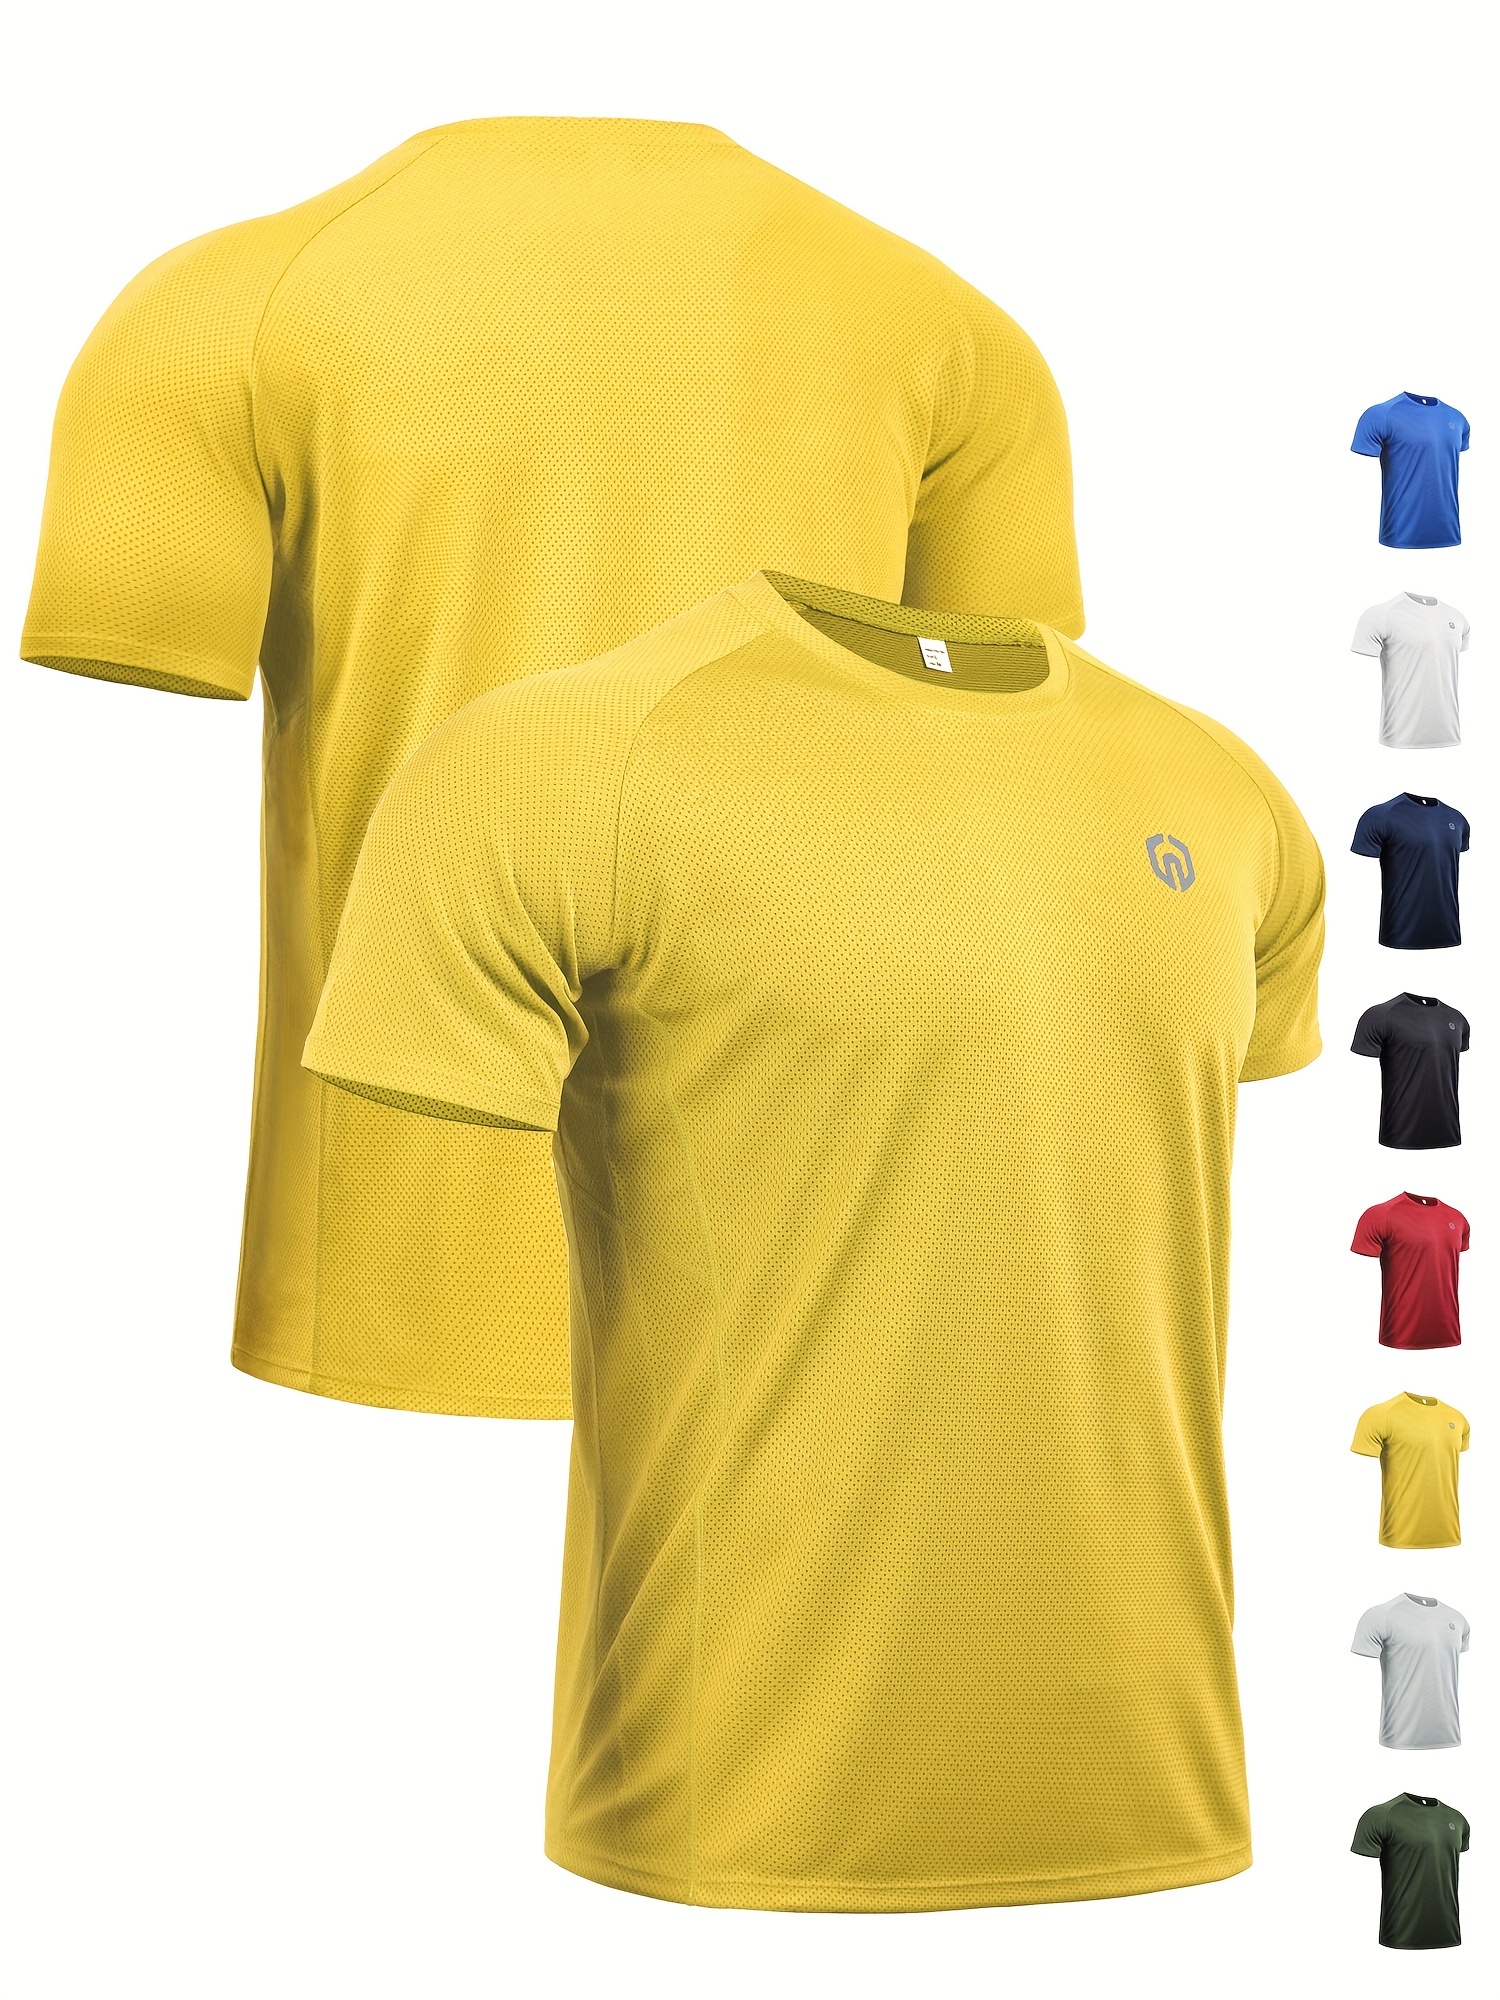 Kydra womens gym/sports/fitness t shirts (olive, maroon), Women's